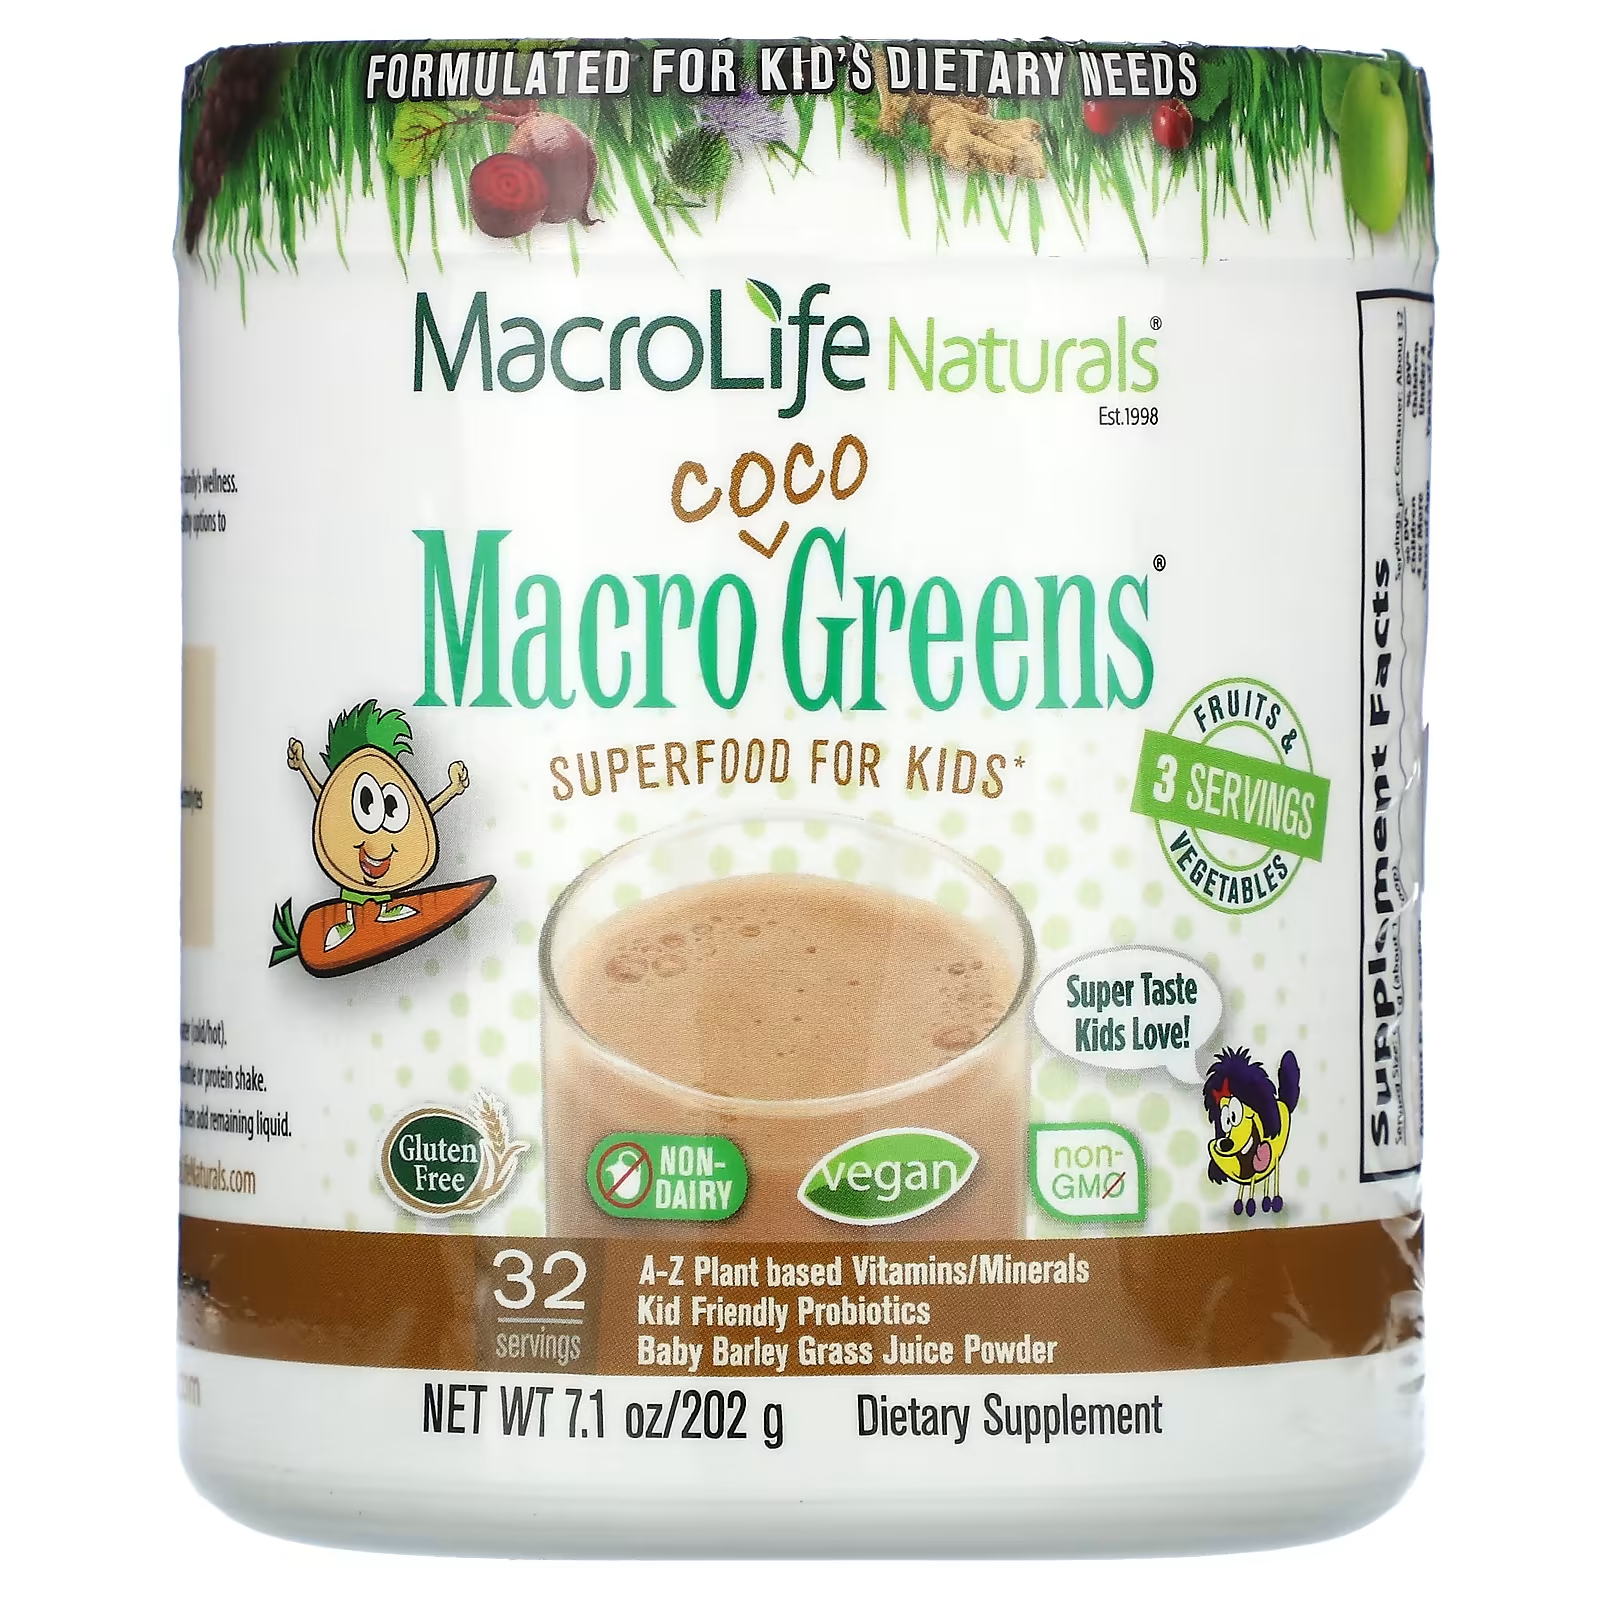 Пищевая добавка Macrolife Naturals Macro Coco Greens для детей, 202 г цена и фото